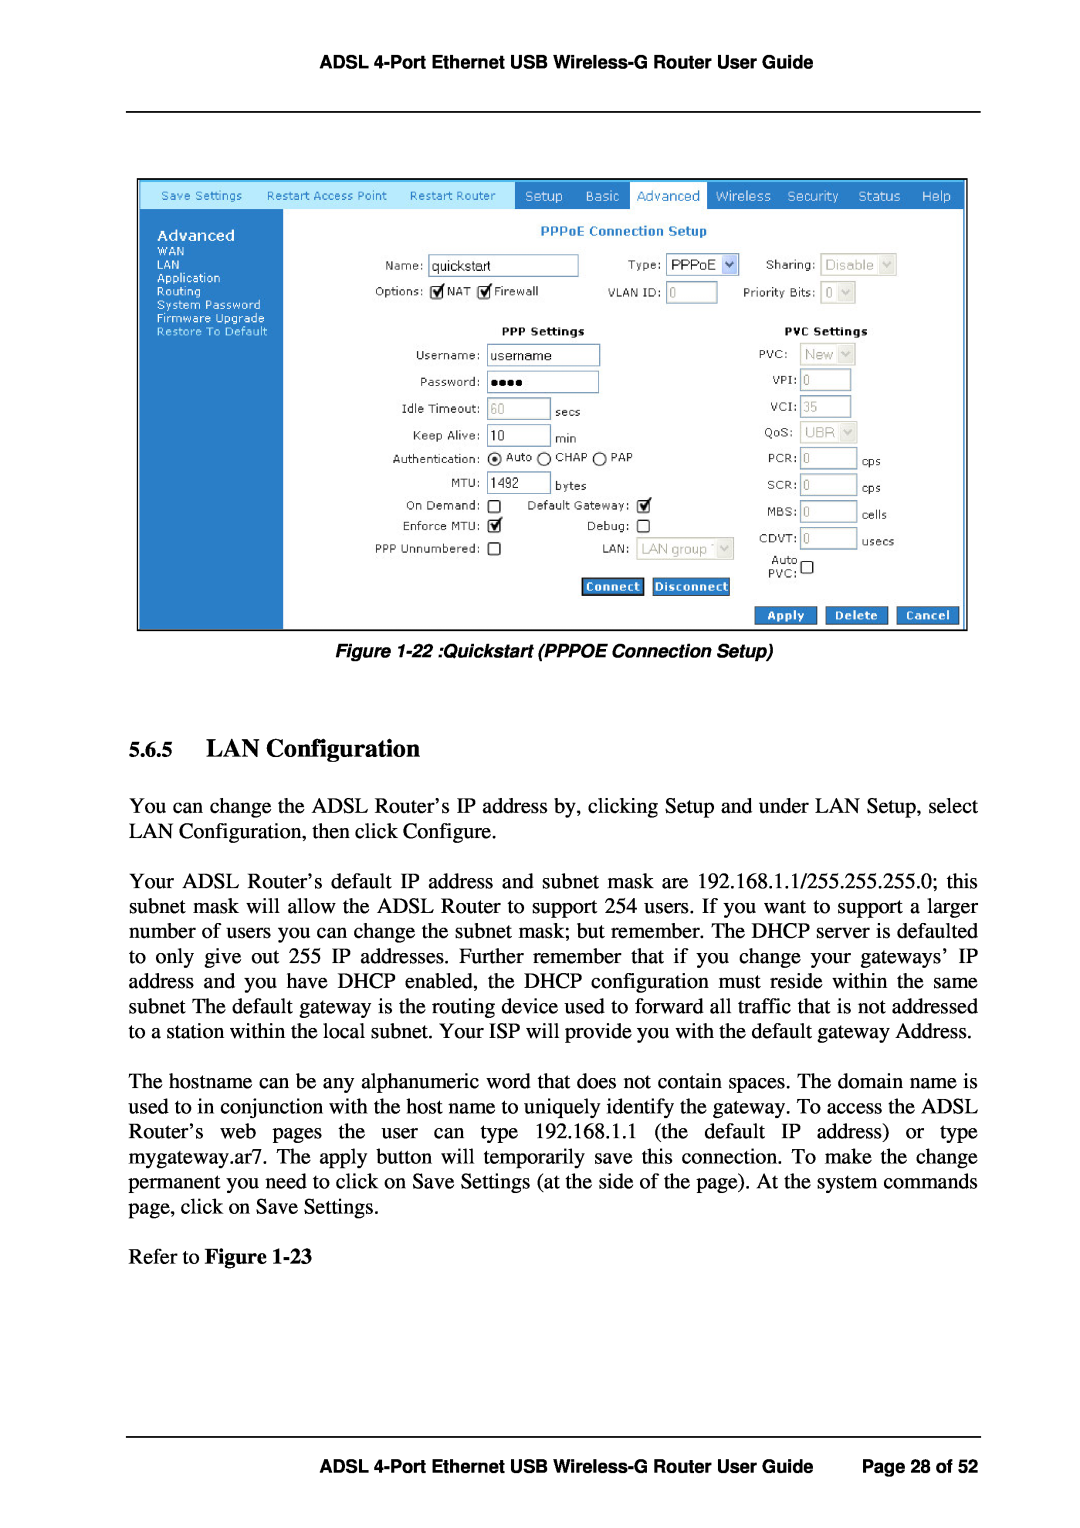 APC ADSL 4-Port manual LAN Configuration, Refer to Figure 